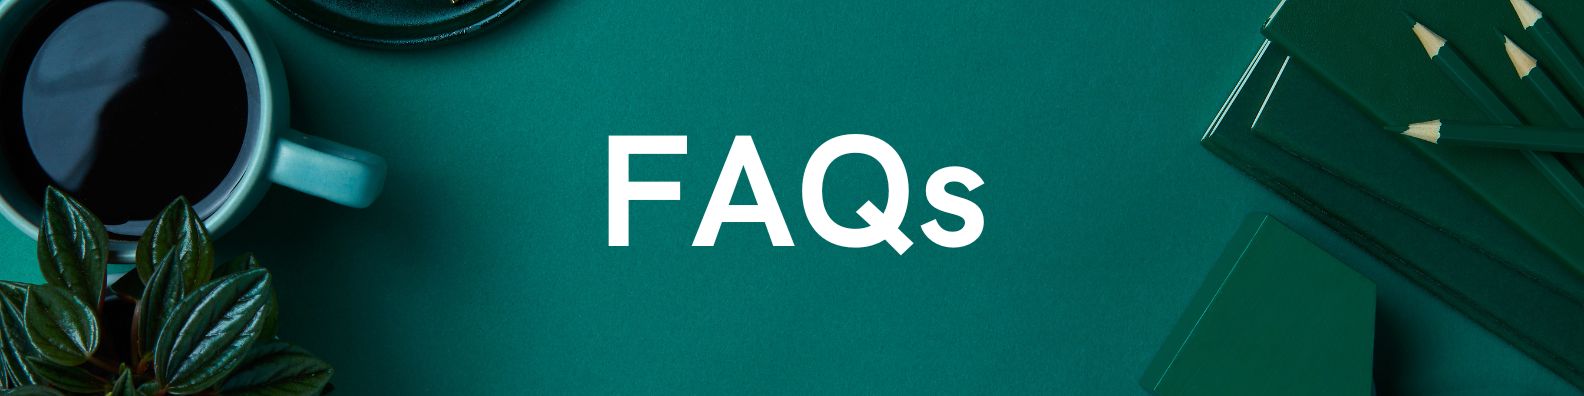 FAQs - Product Development Company - GID Company